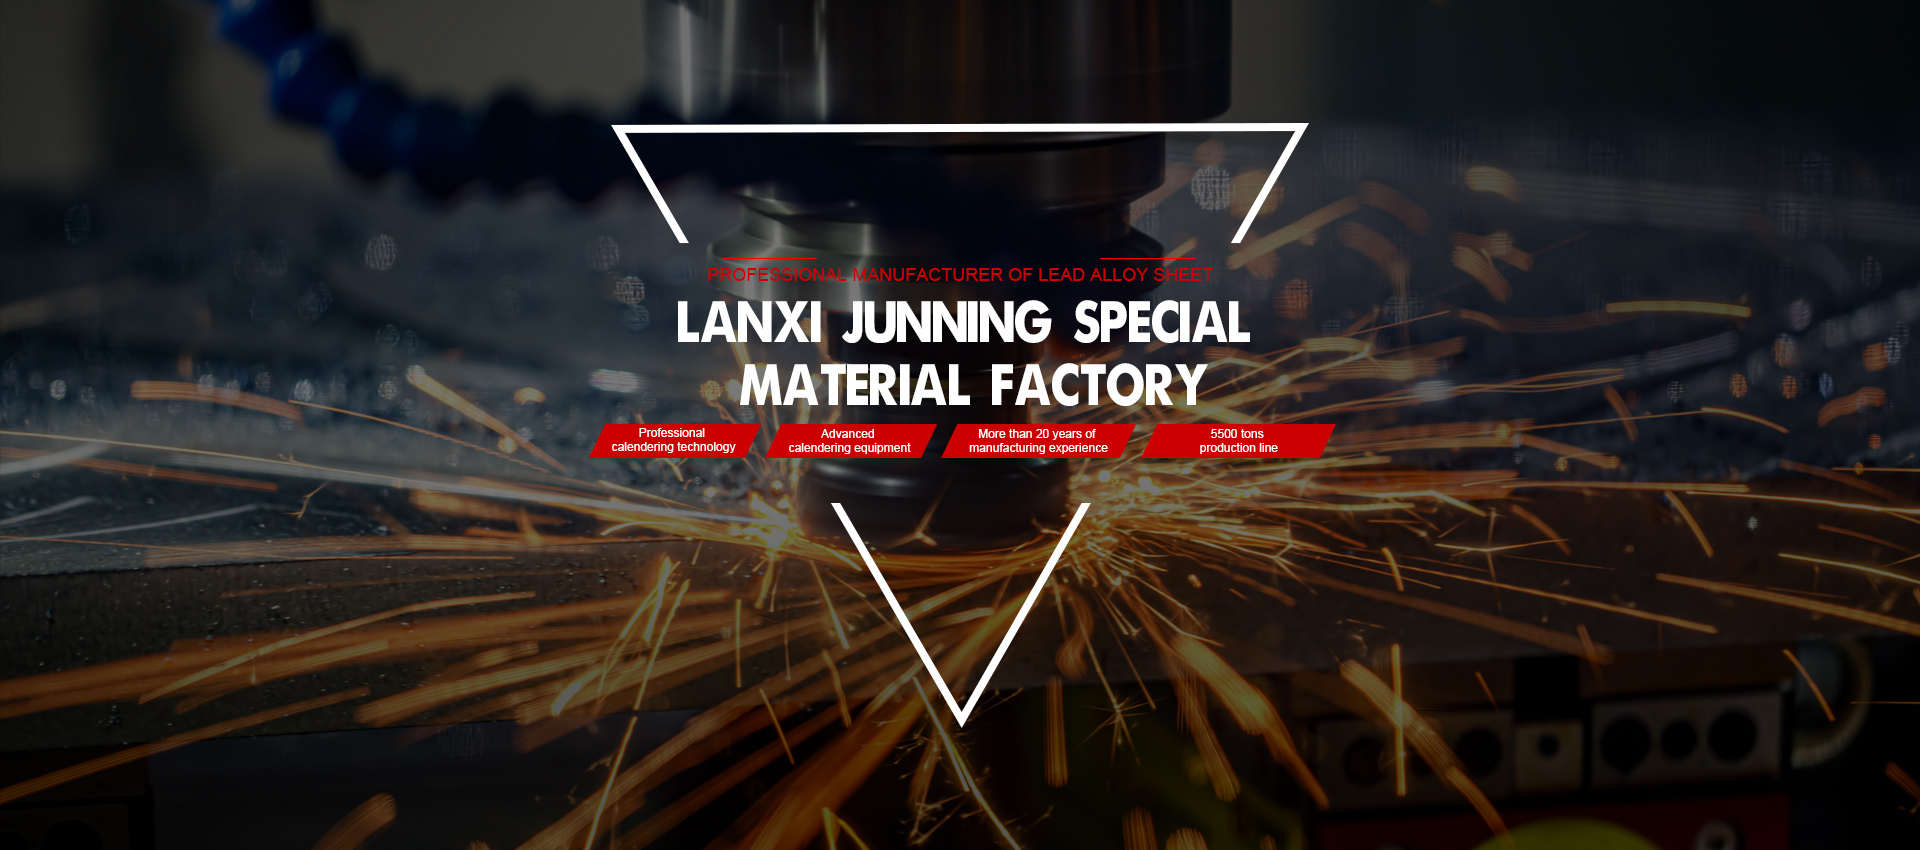 Lanxi Junning Special Material Factory